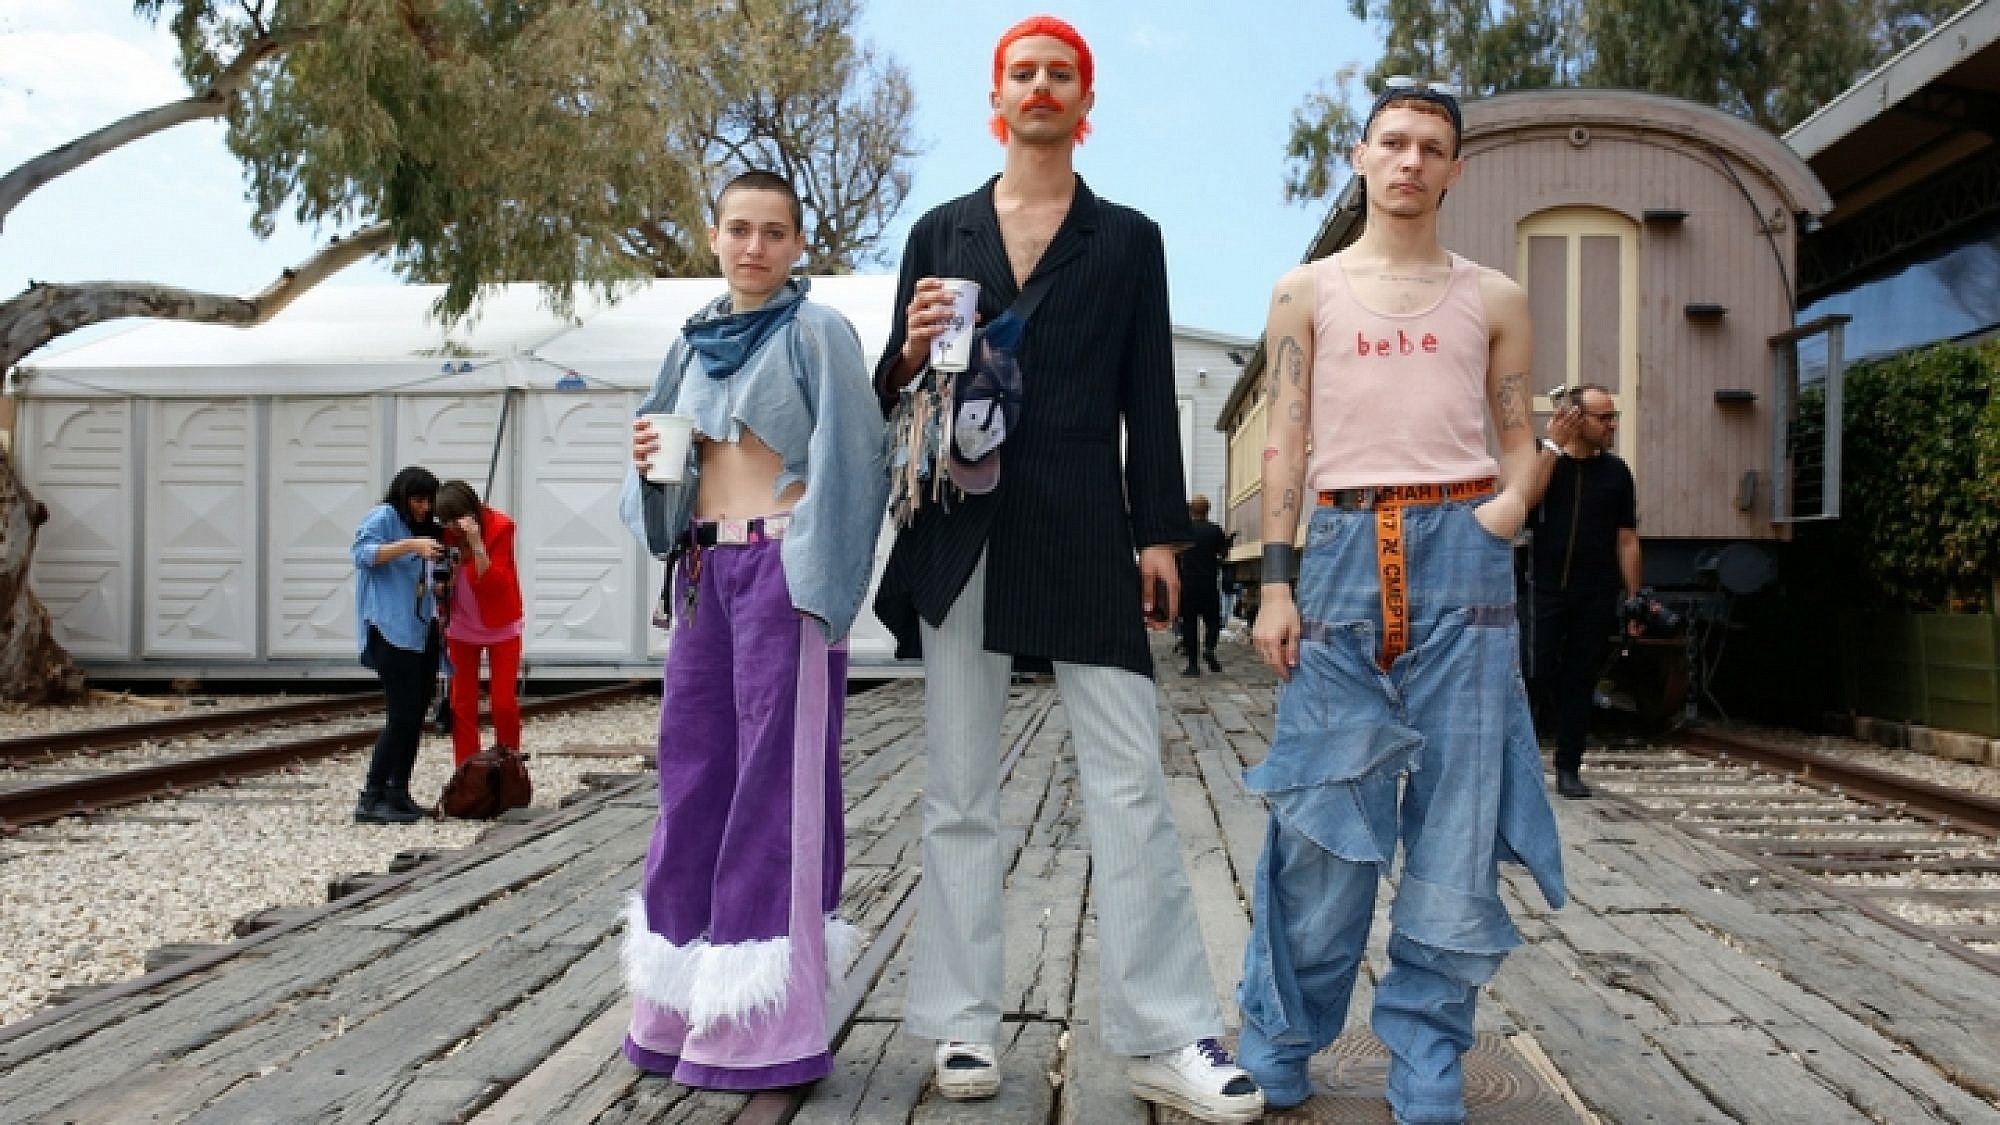 סטריט סטייל בשבוע האופנה תל אביב | צילום: אדריאן סבל